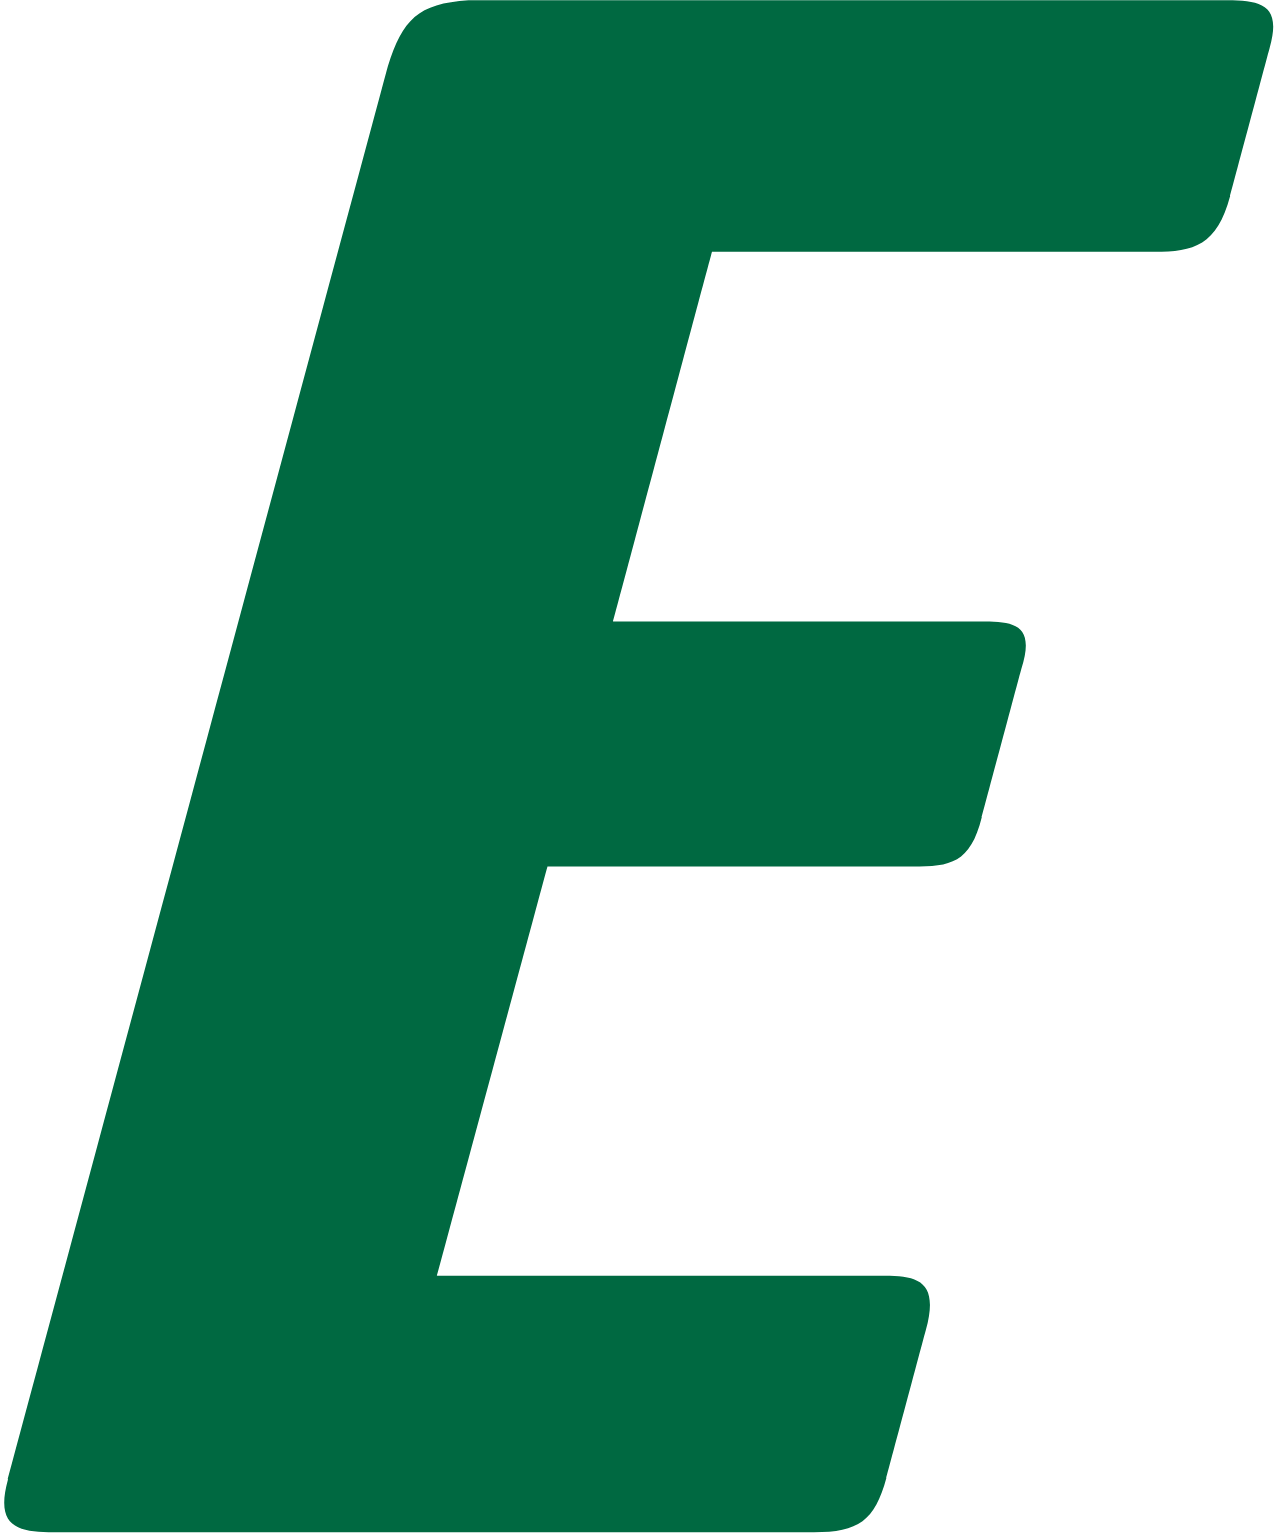 Europris logo (transparent PNG)